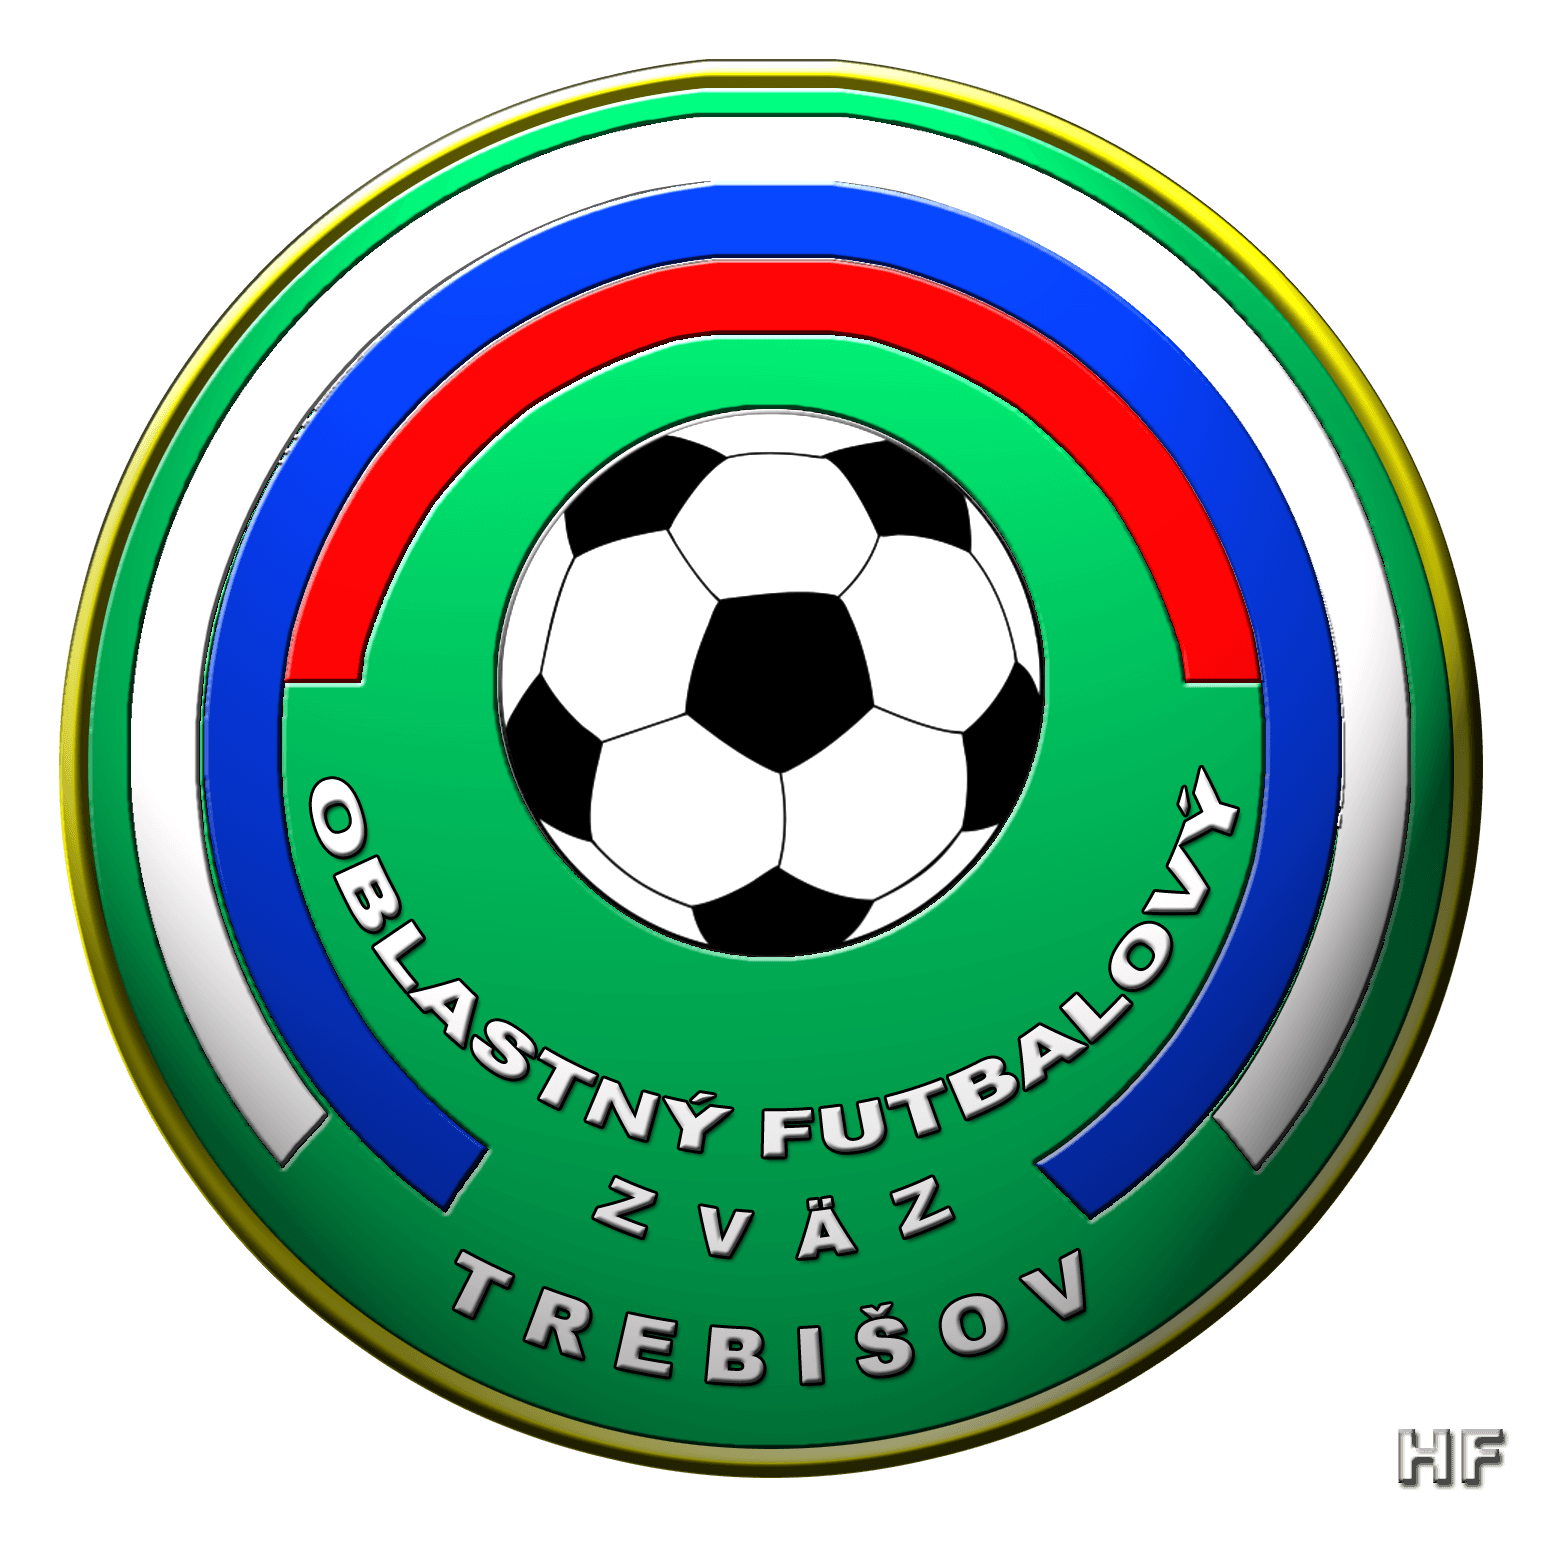 HF Sports Logo - ObFZ Trebisov , football logo , Slovakia | Futbol soccer | Pinterest ...